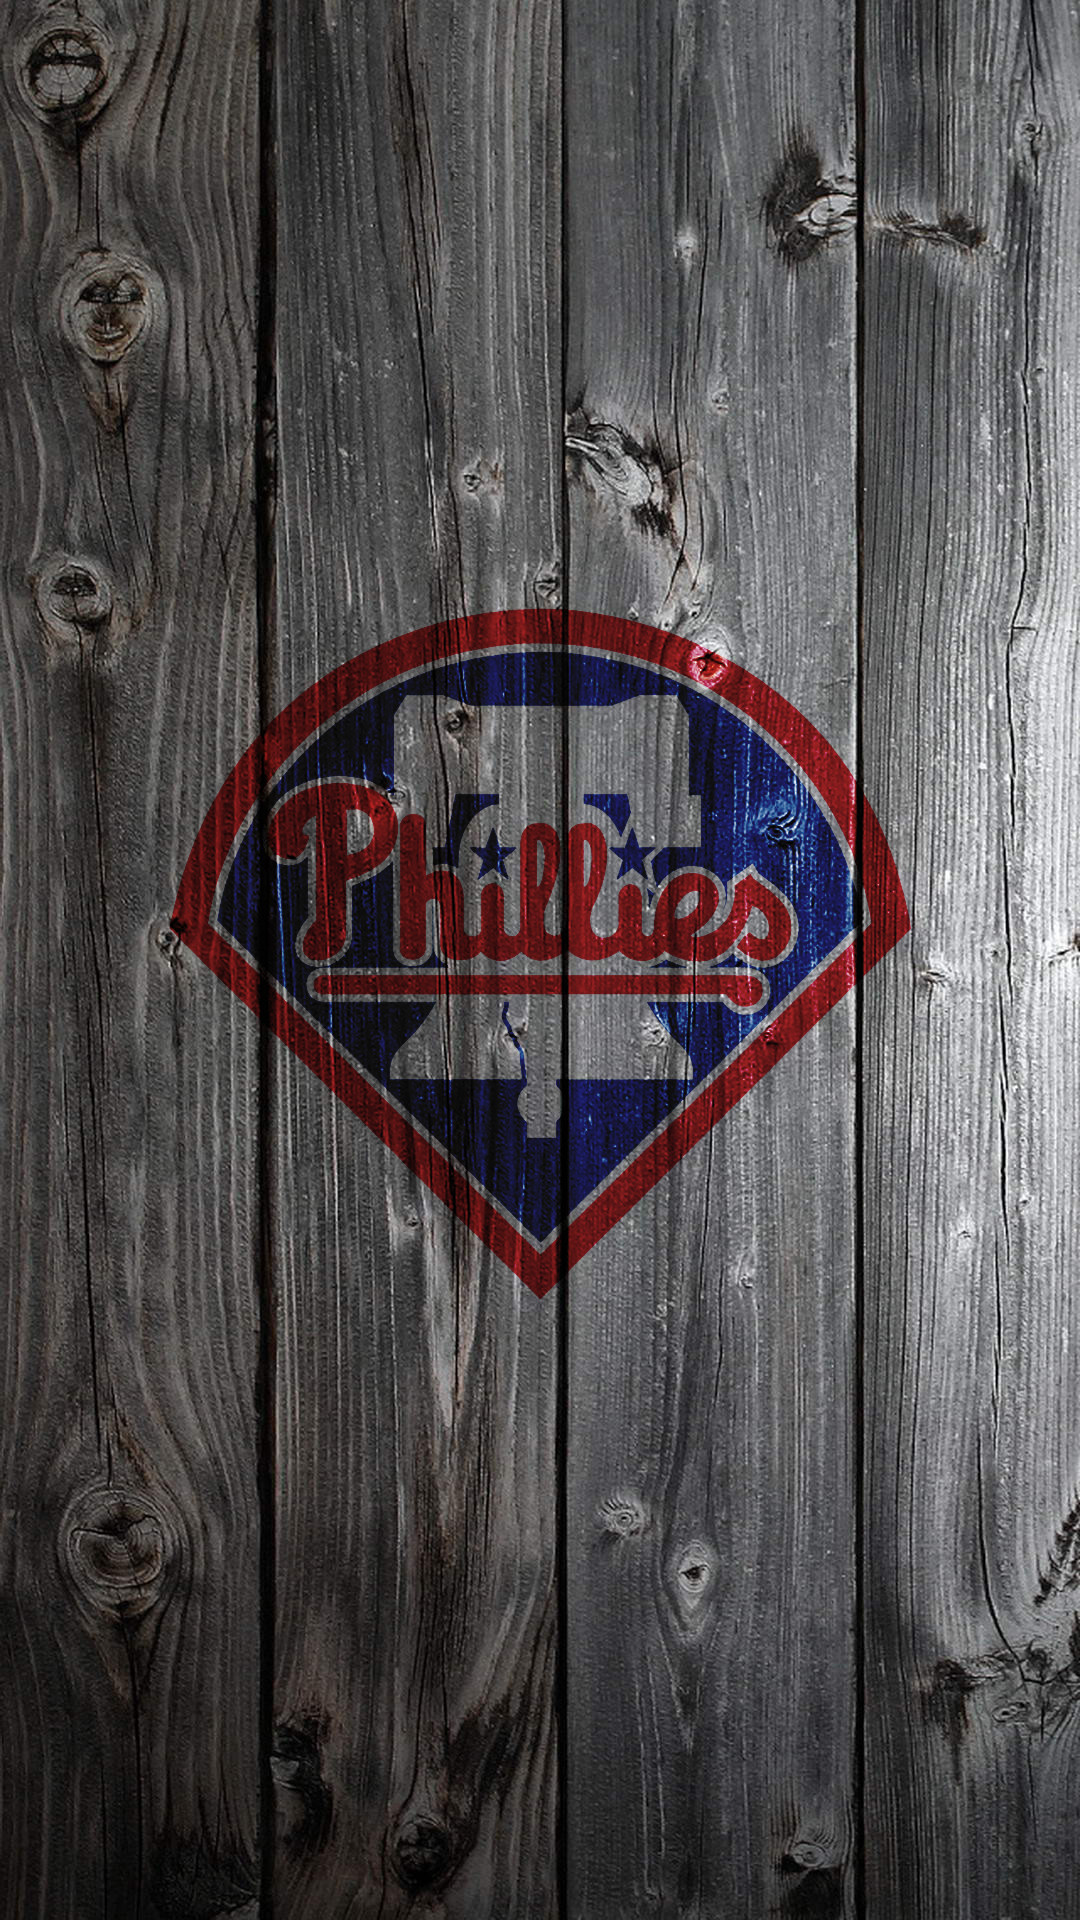 Philadelphia Phillies Wallpapers